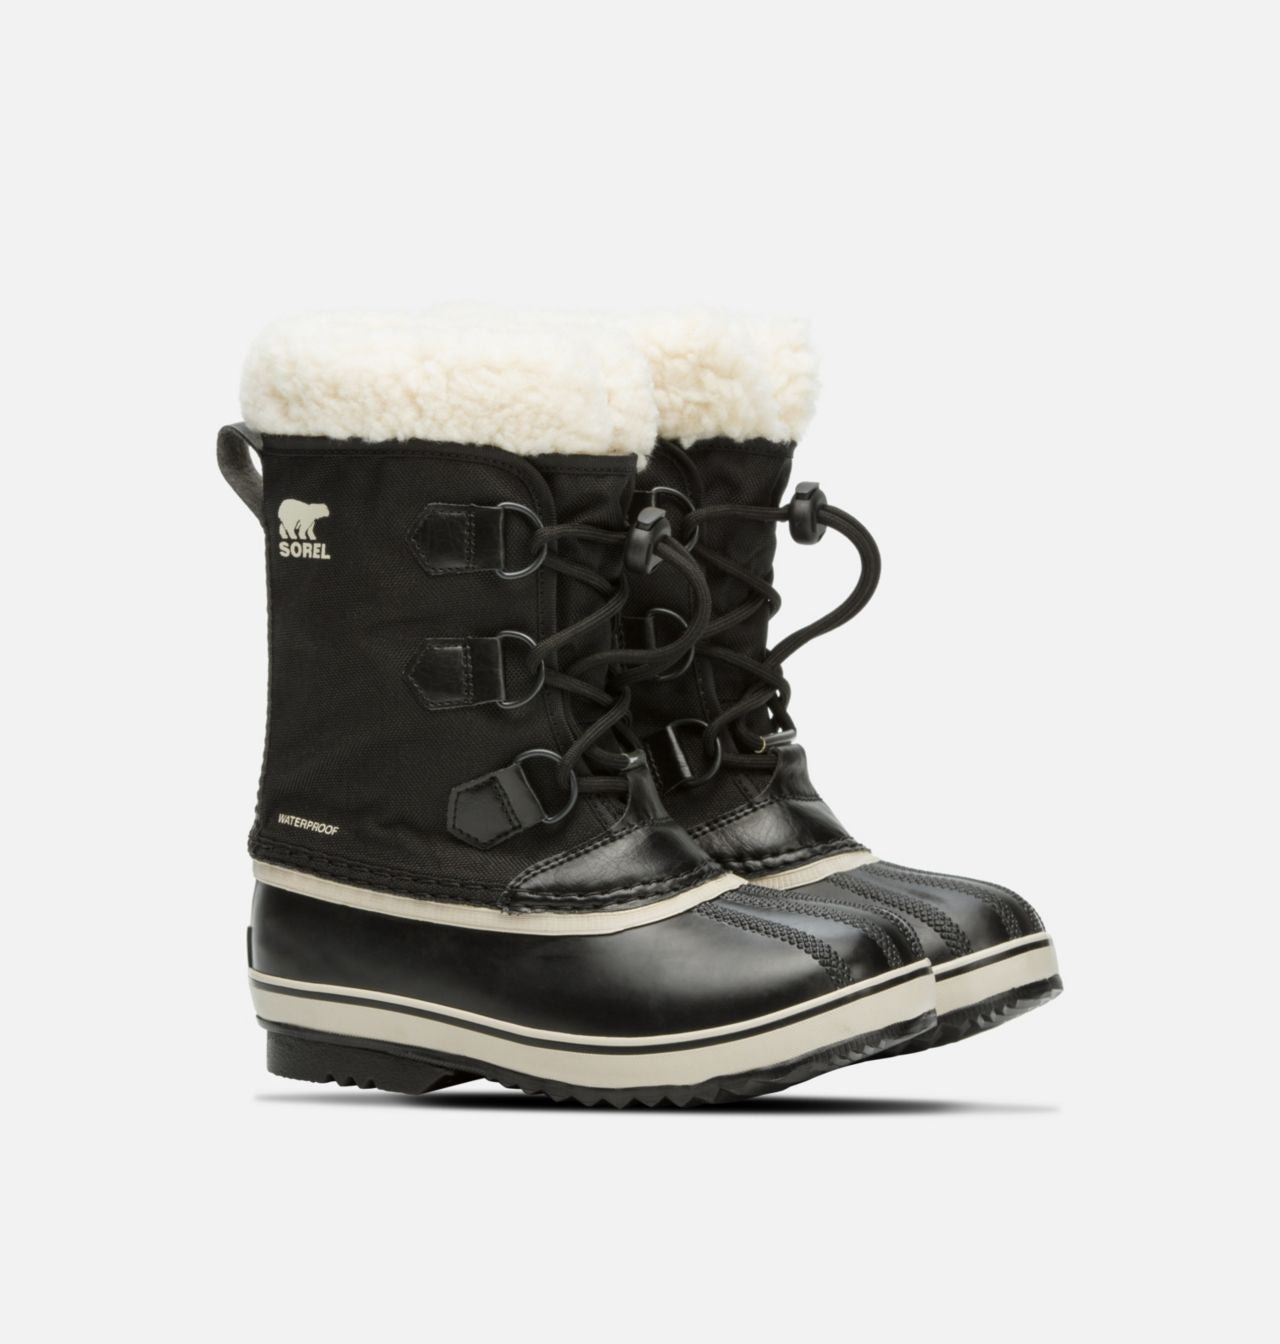 Sorel Yoot Pac Nylon Kids Snow Boots - Black